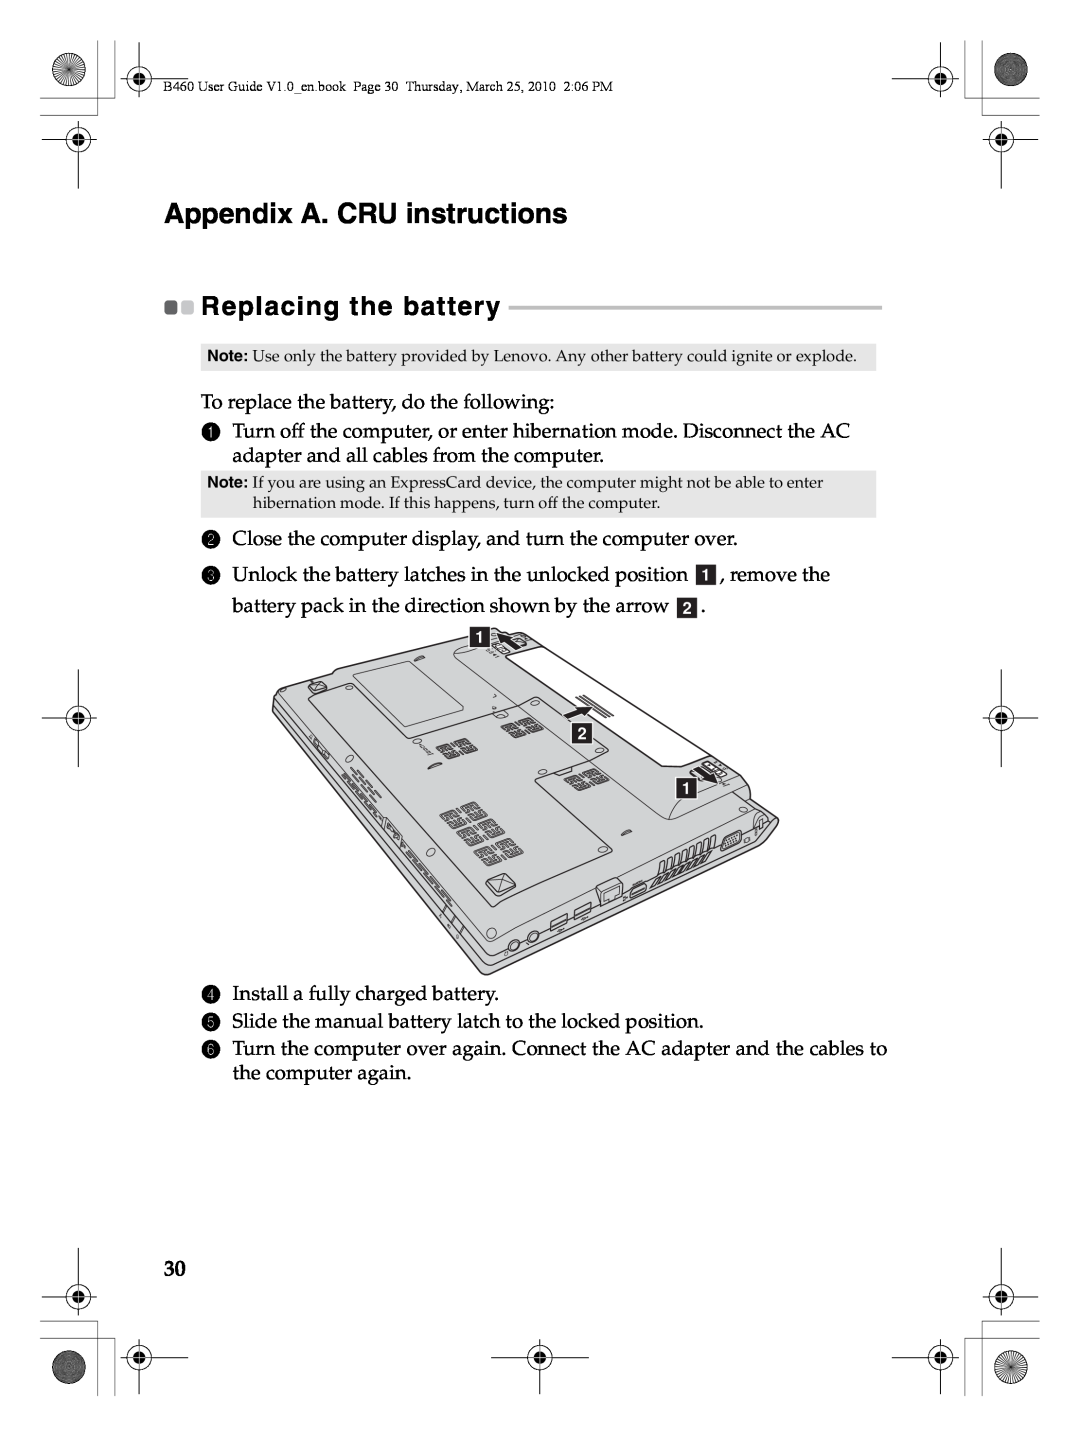 Lenovo B460 manual Appendix A. CRU instructions, Replacing the battery 